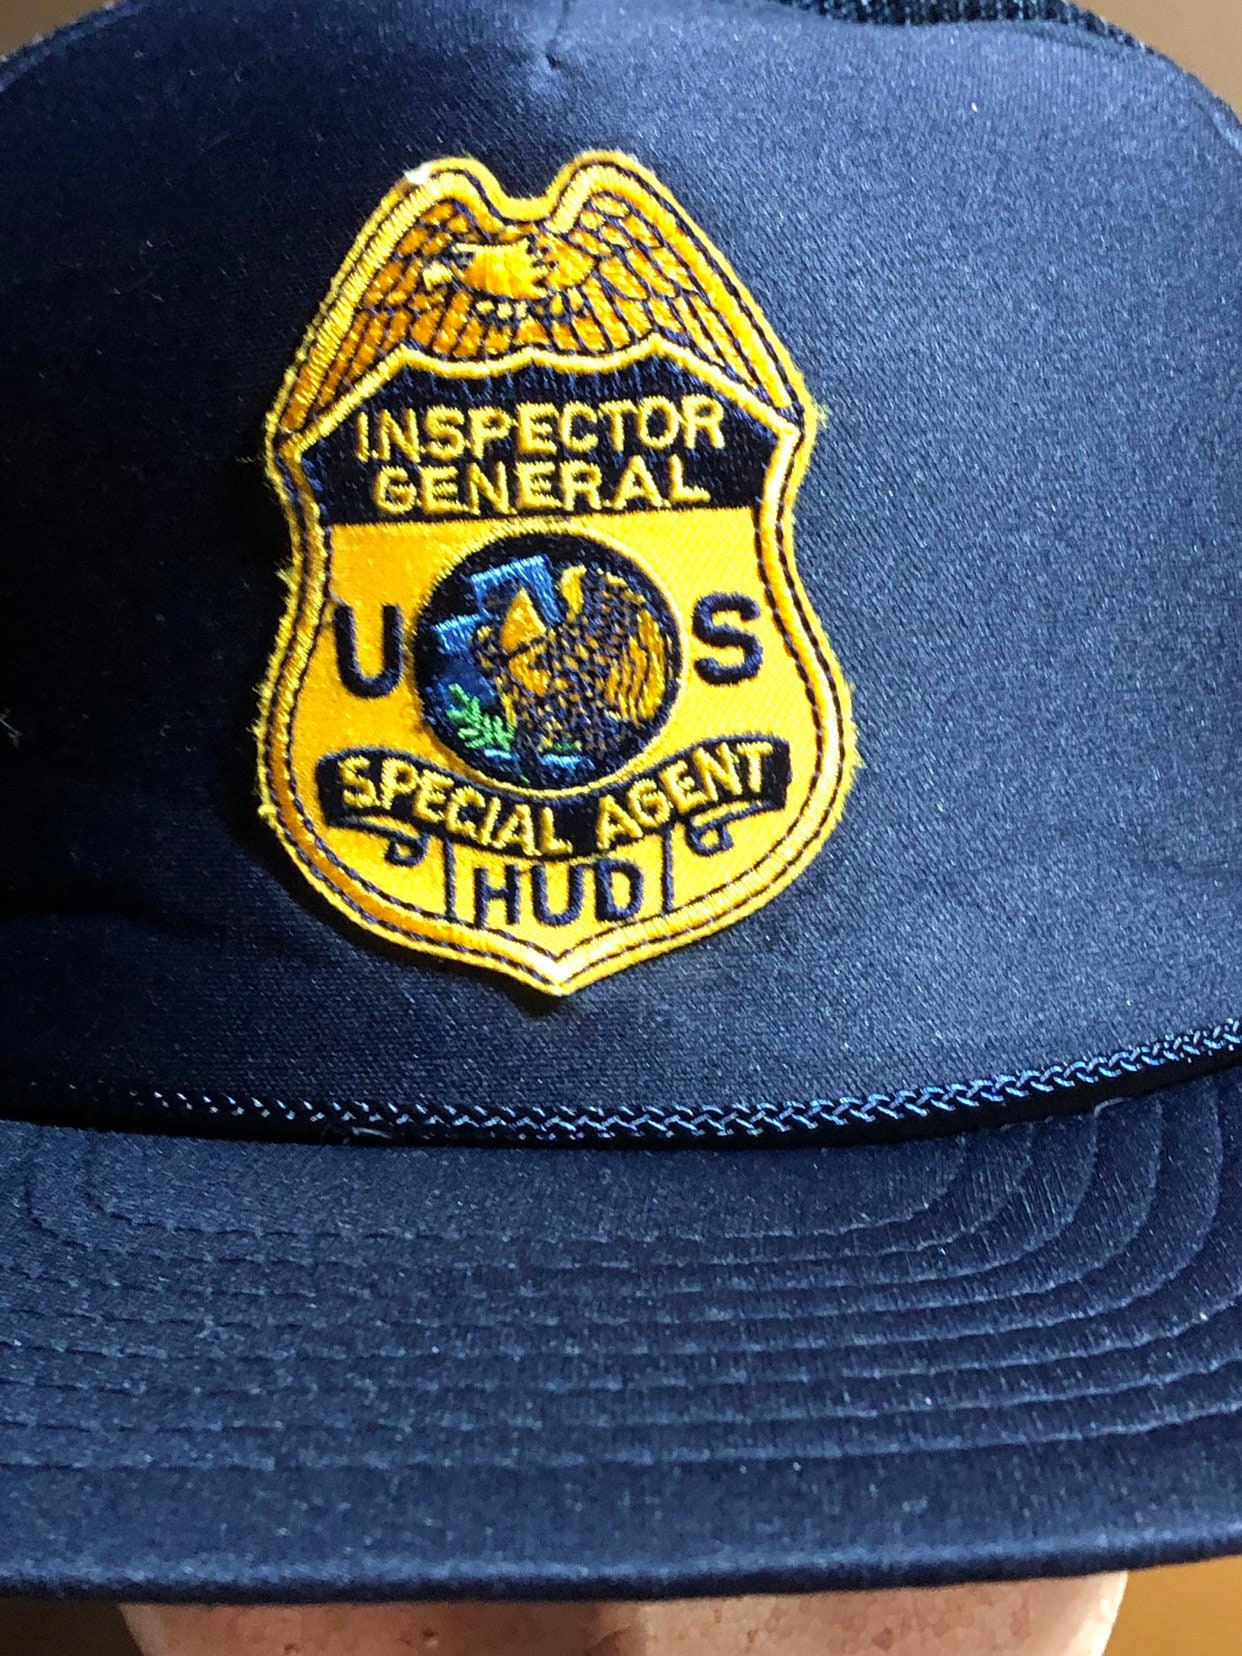 Us Inspector General Hat Special Agent Hud Vintage Cap Retro Uniform Hat